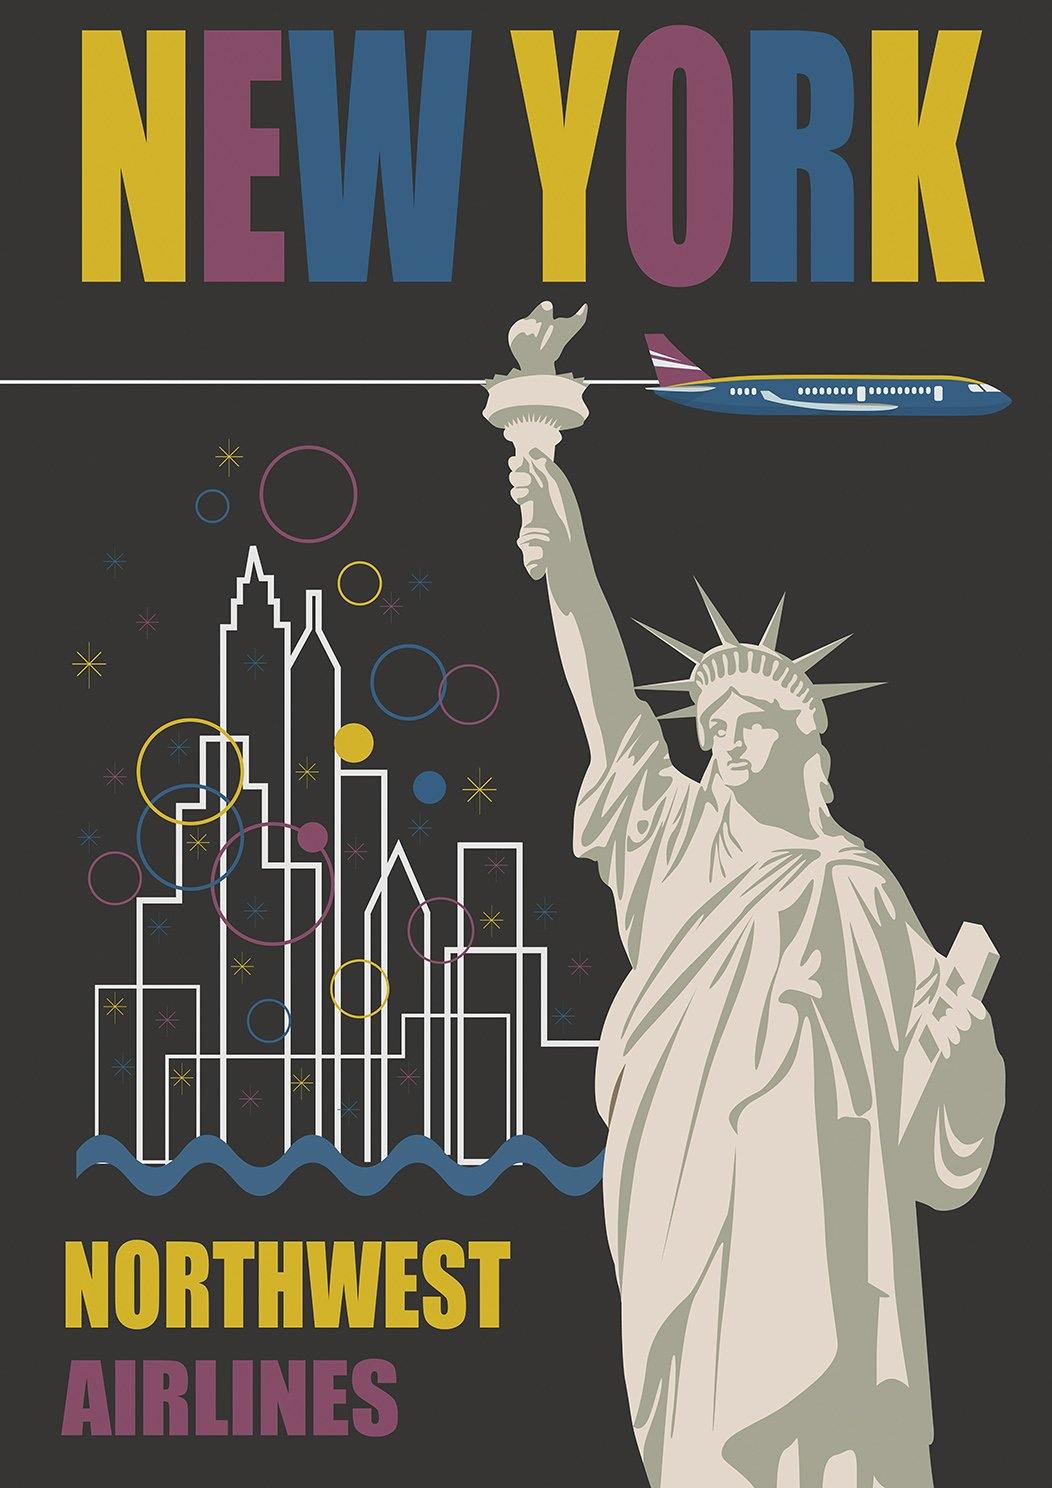 NEW YORK POSTER: Northwest Statue of Liberty Travel Advert - Pimlico Prints